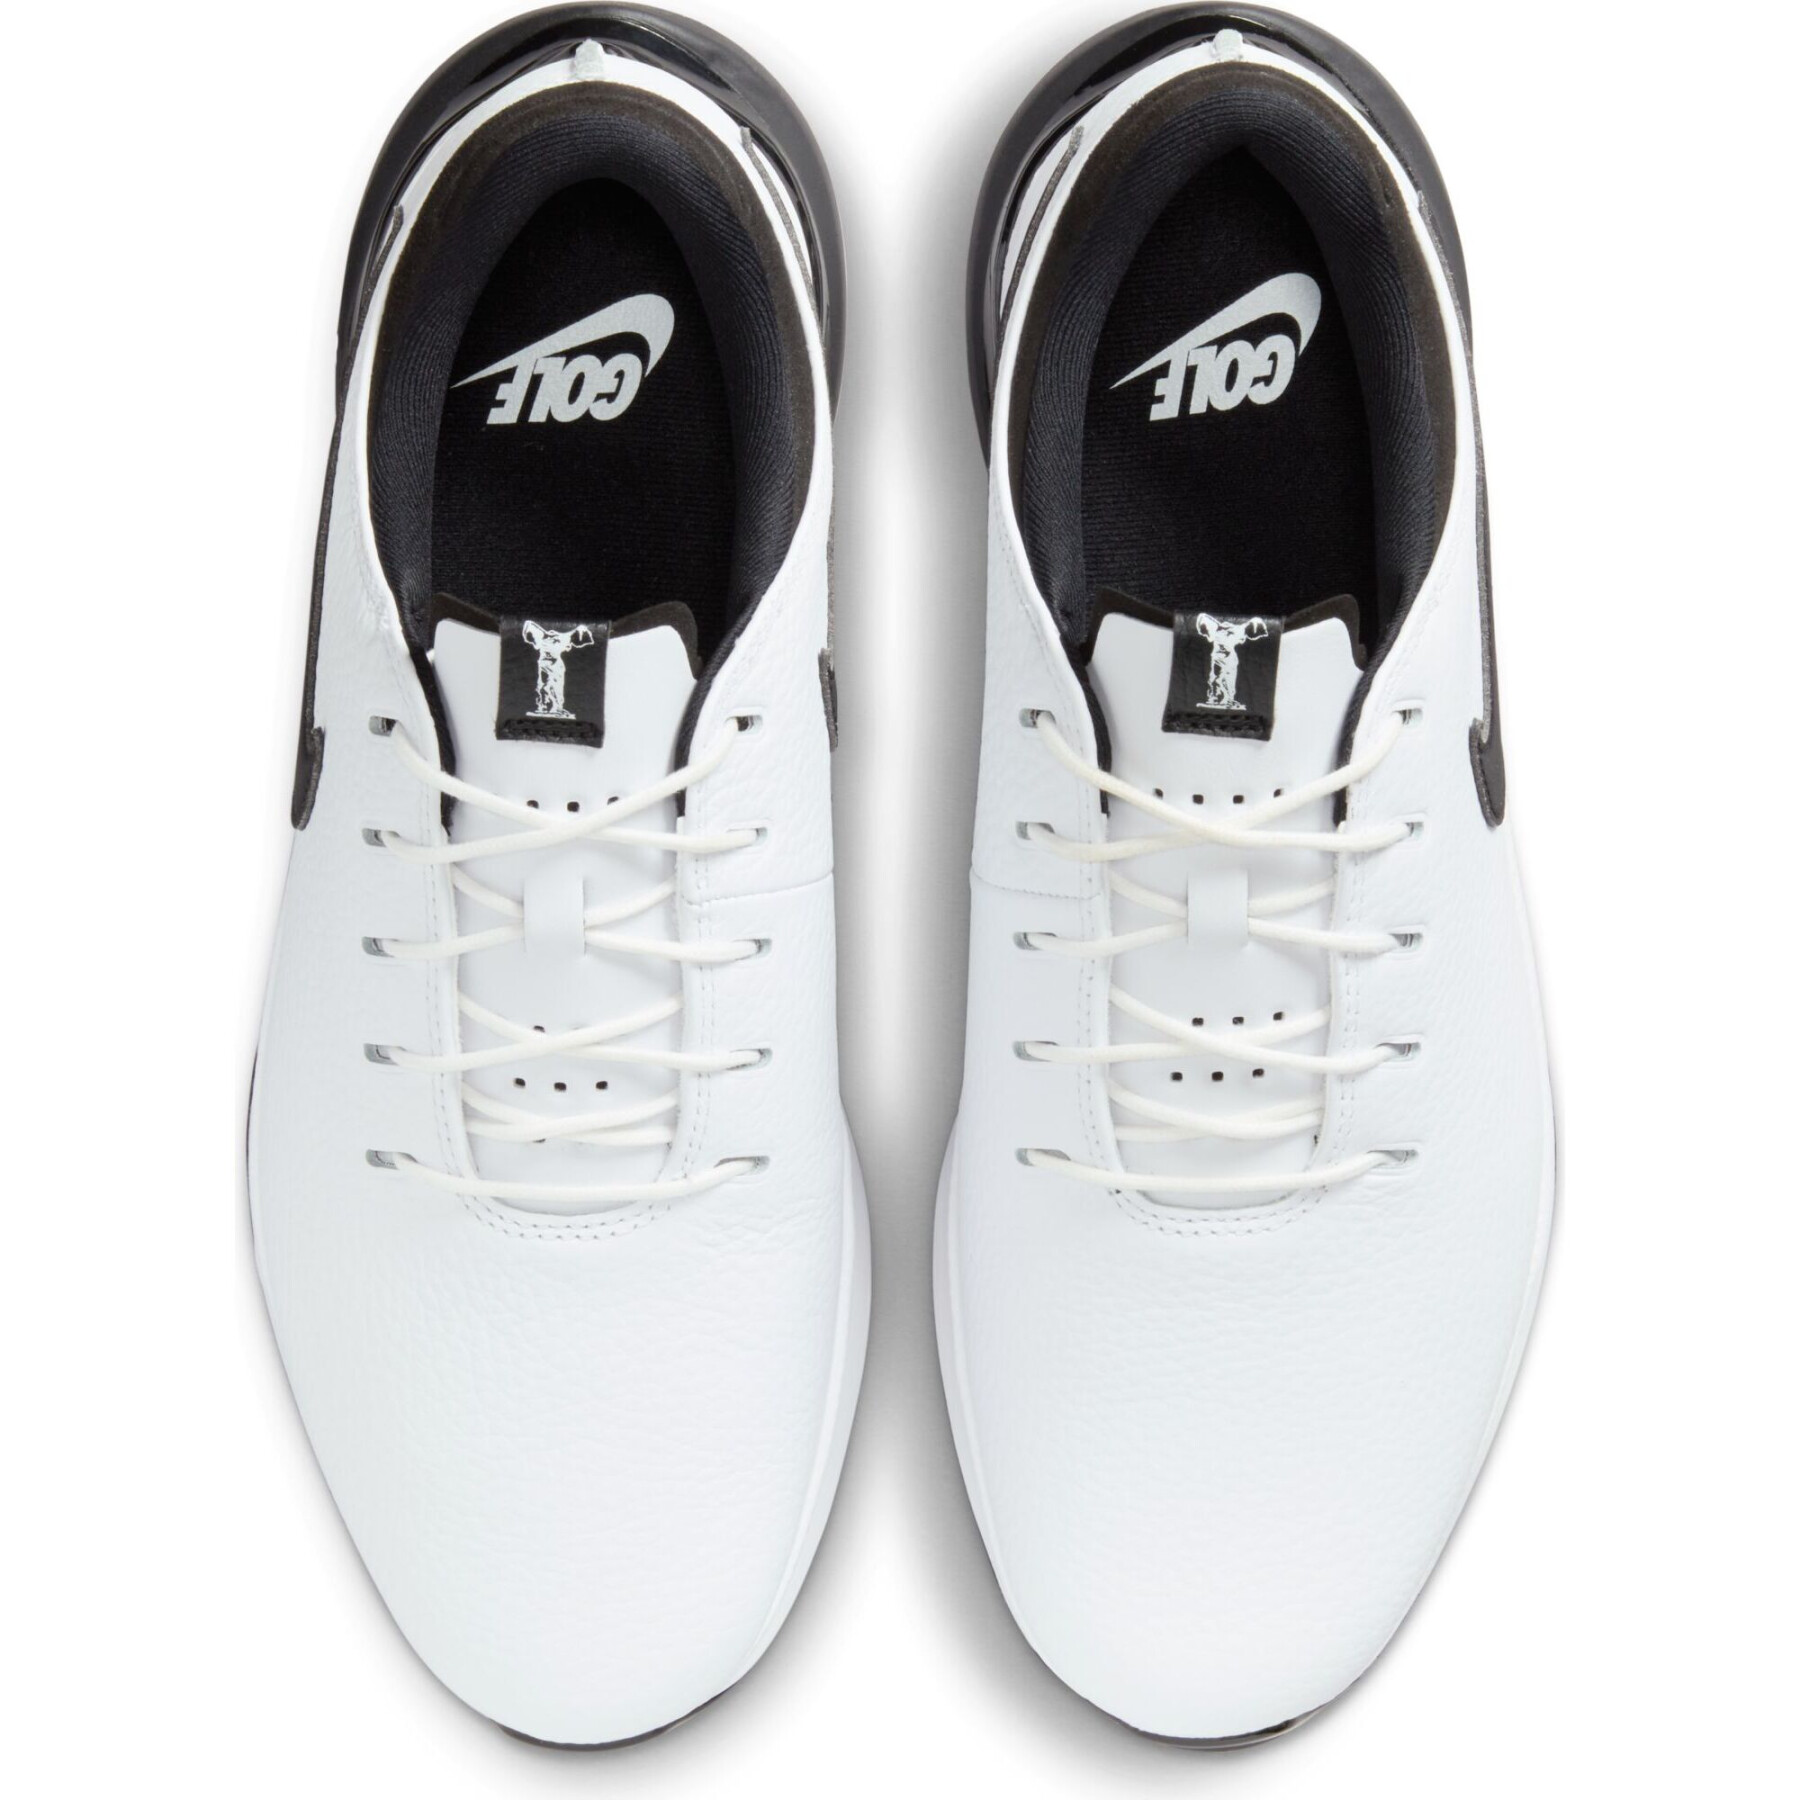 Sapatos de golfe Nike Air Zoom Victory Tour 3